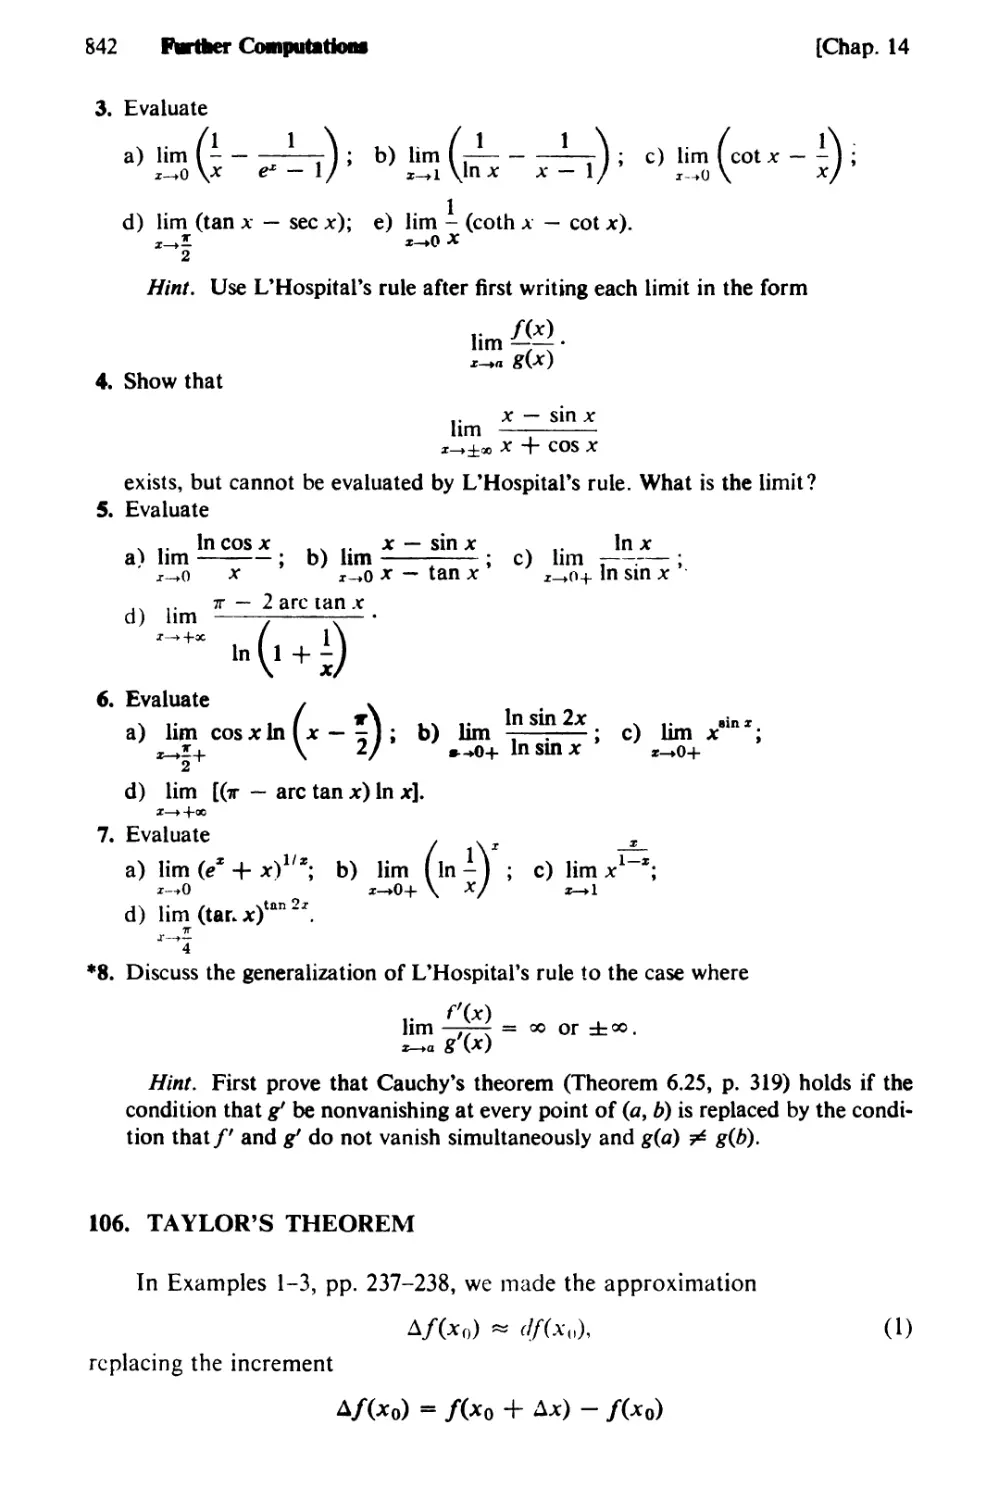 106. Taylor's Theorem